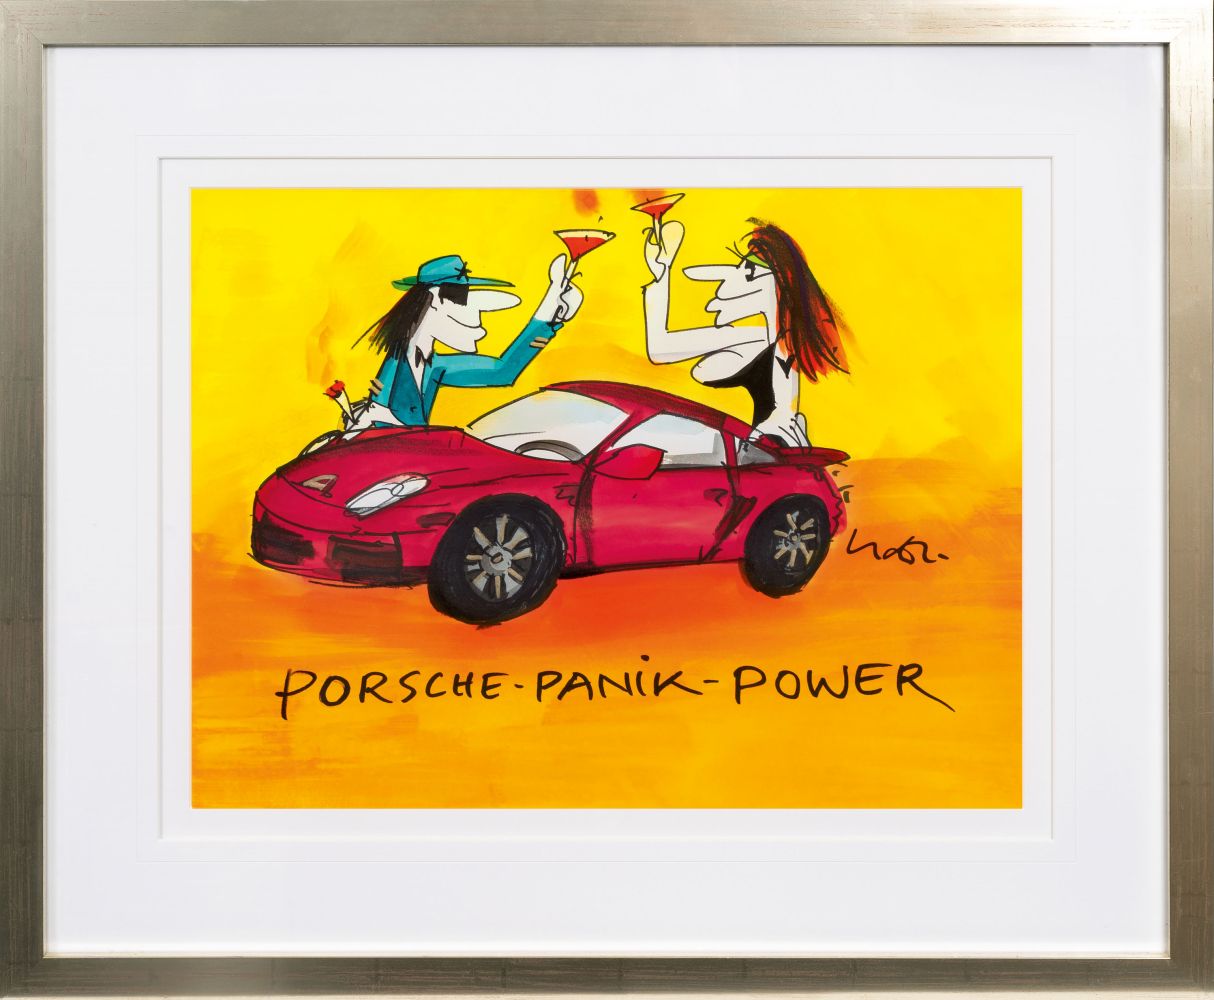 Porsche Panik Power - image 2